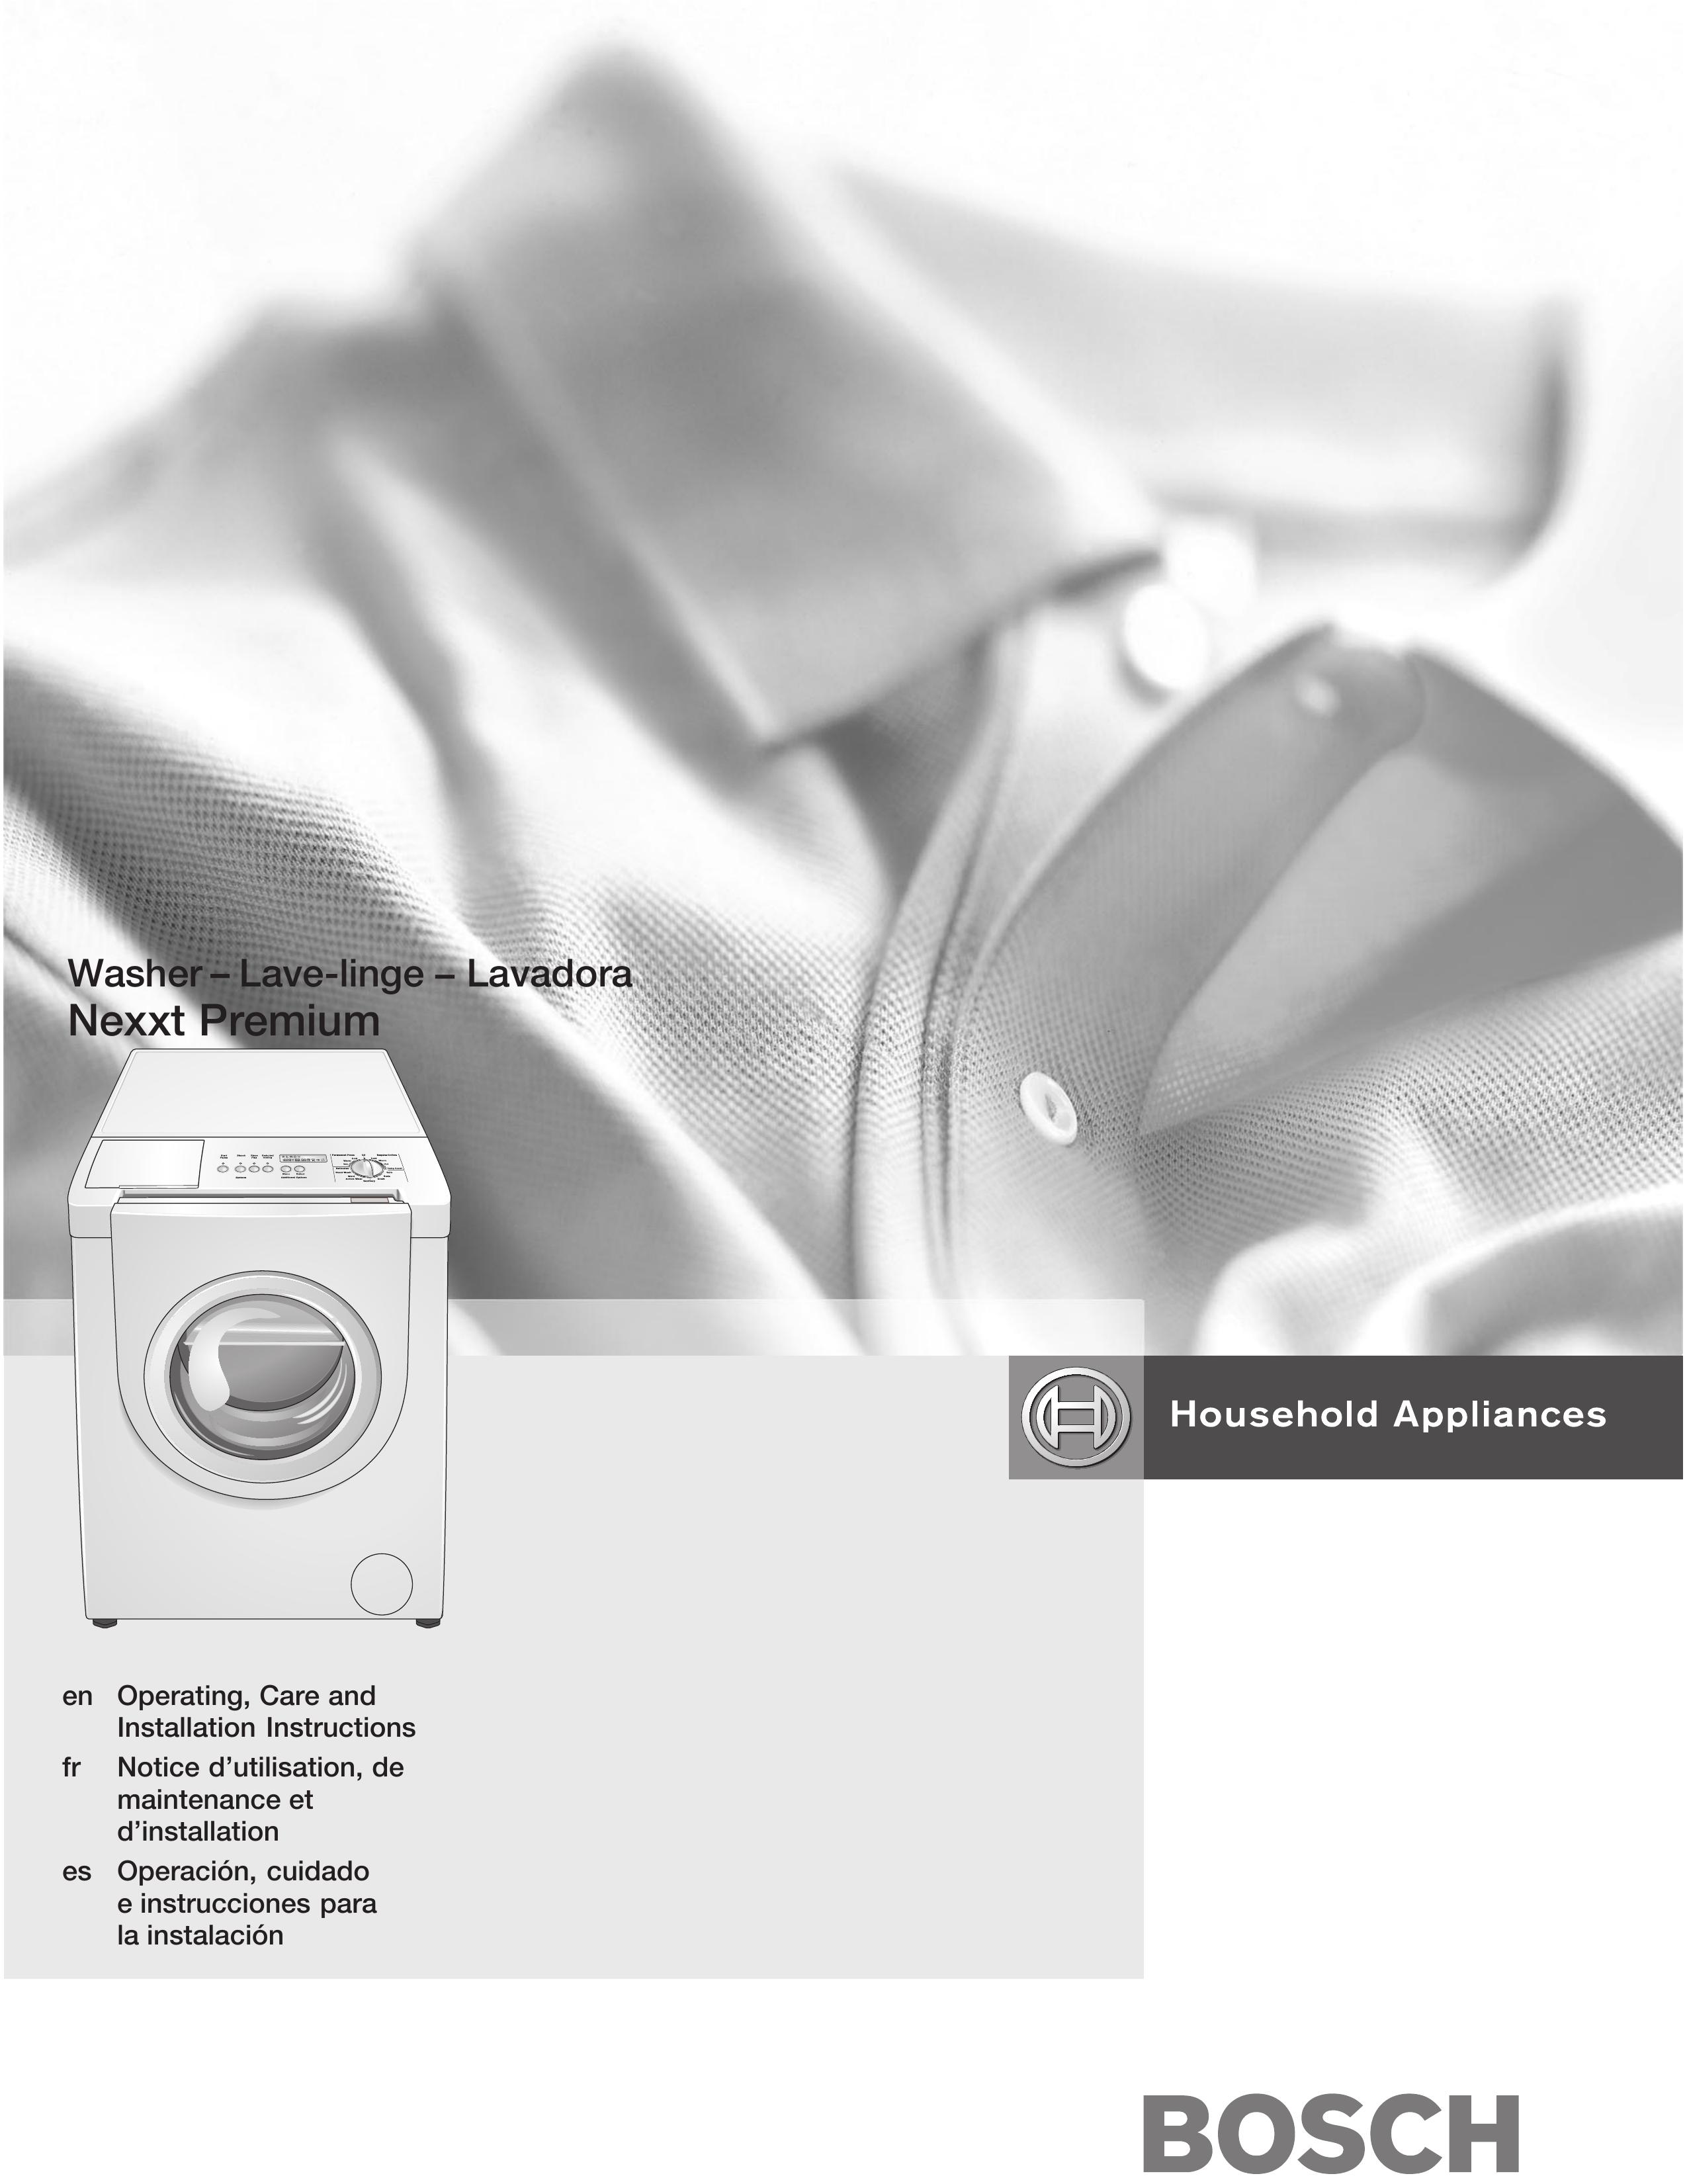 Bosch Appliances BOSCH Washer Washer User Manual